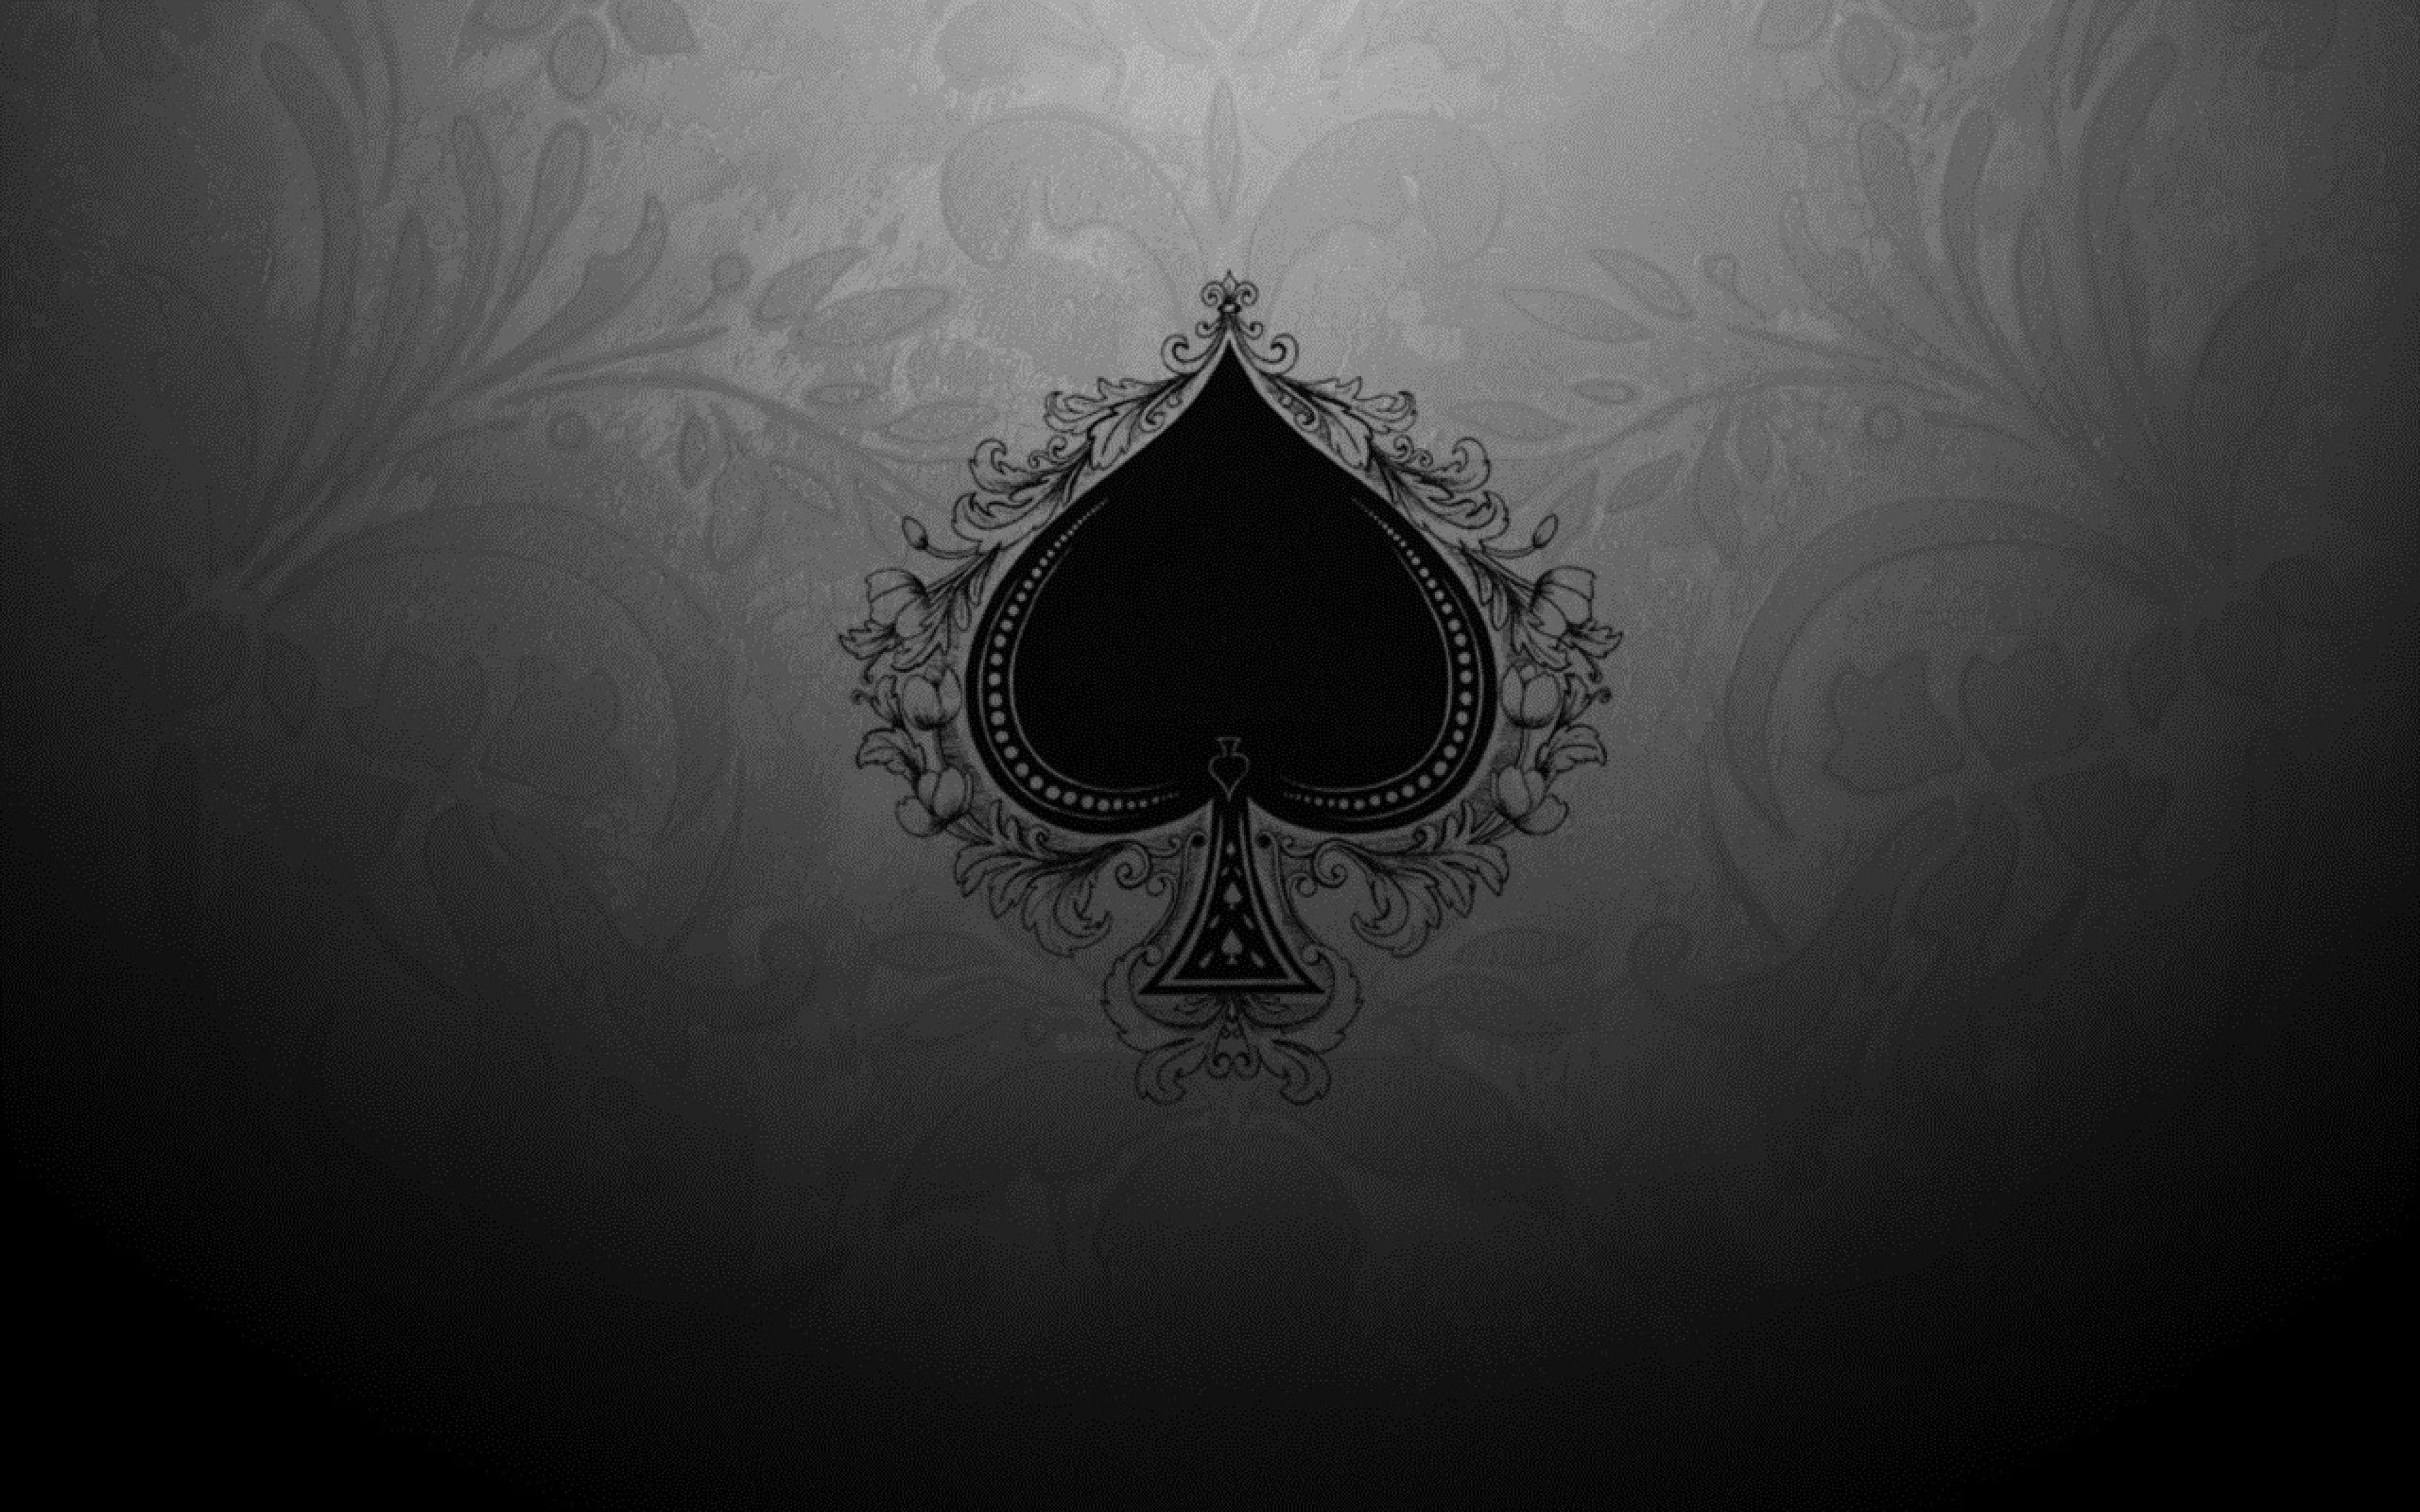 64 spades poker